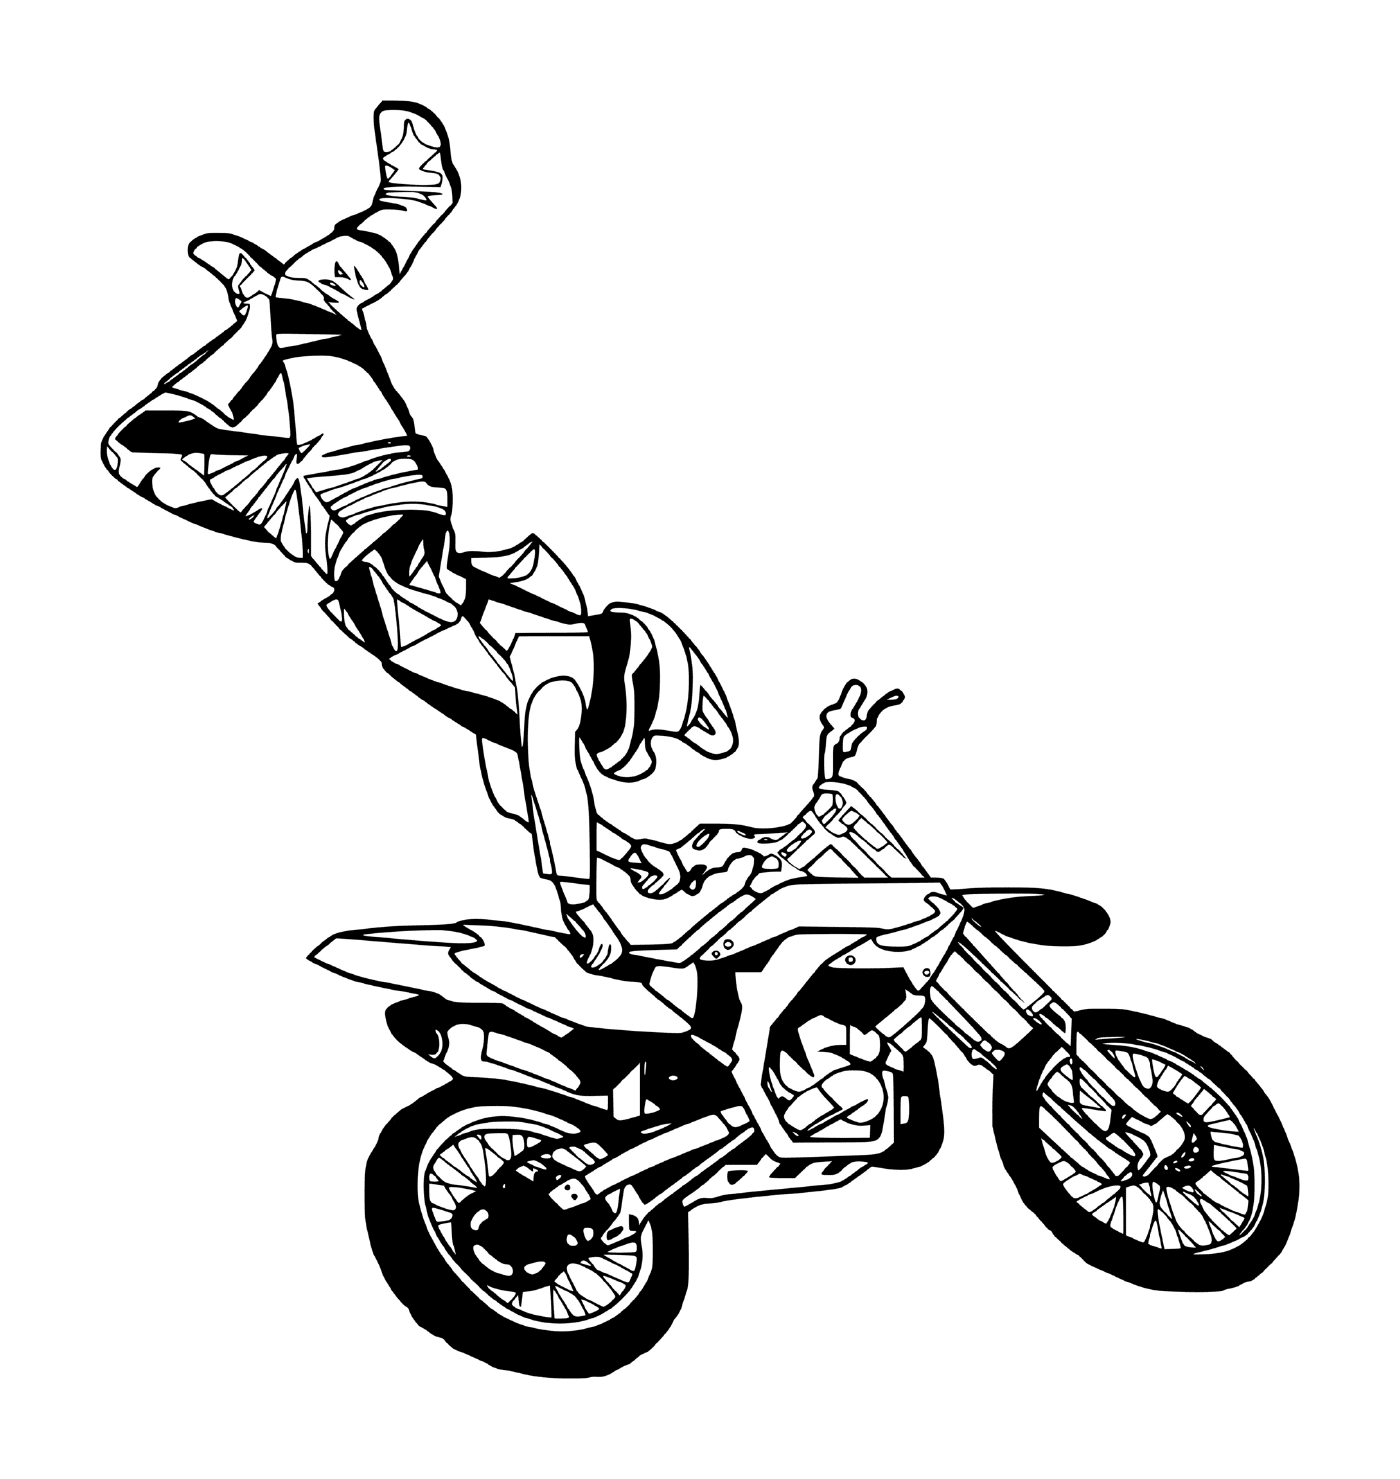 saut backflip motocross